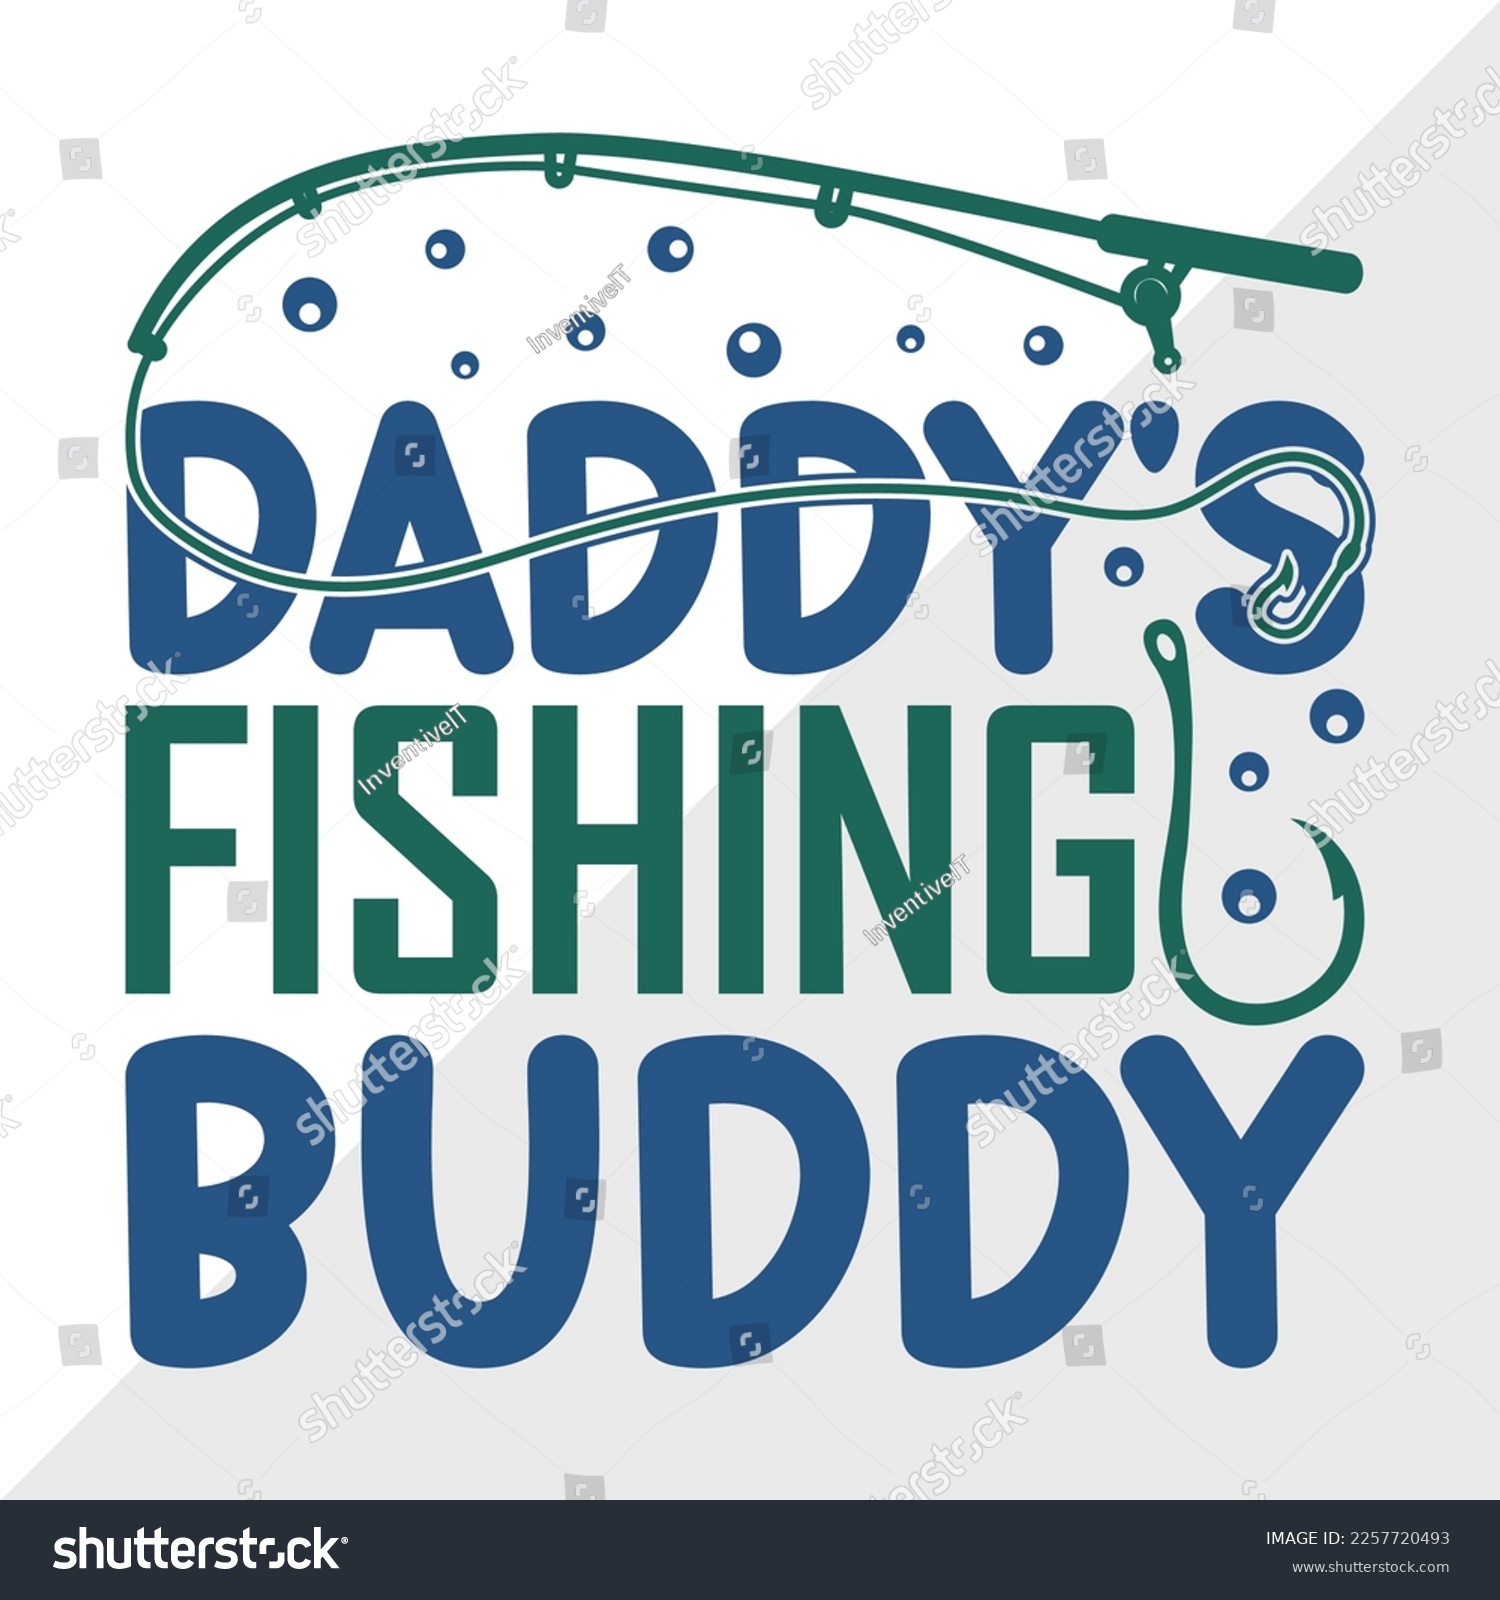 SVG of Daddys Fishing Buddy SVG Printable Vector Illustration svg